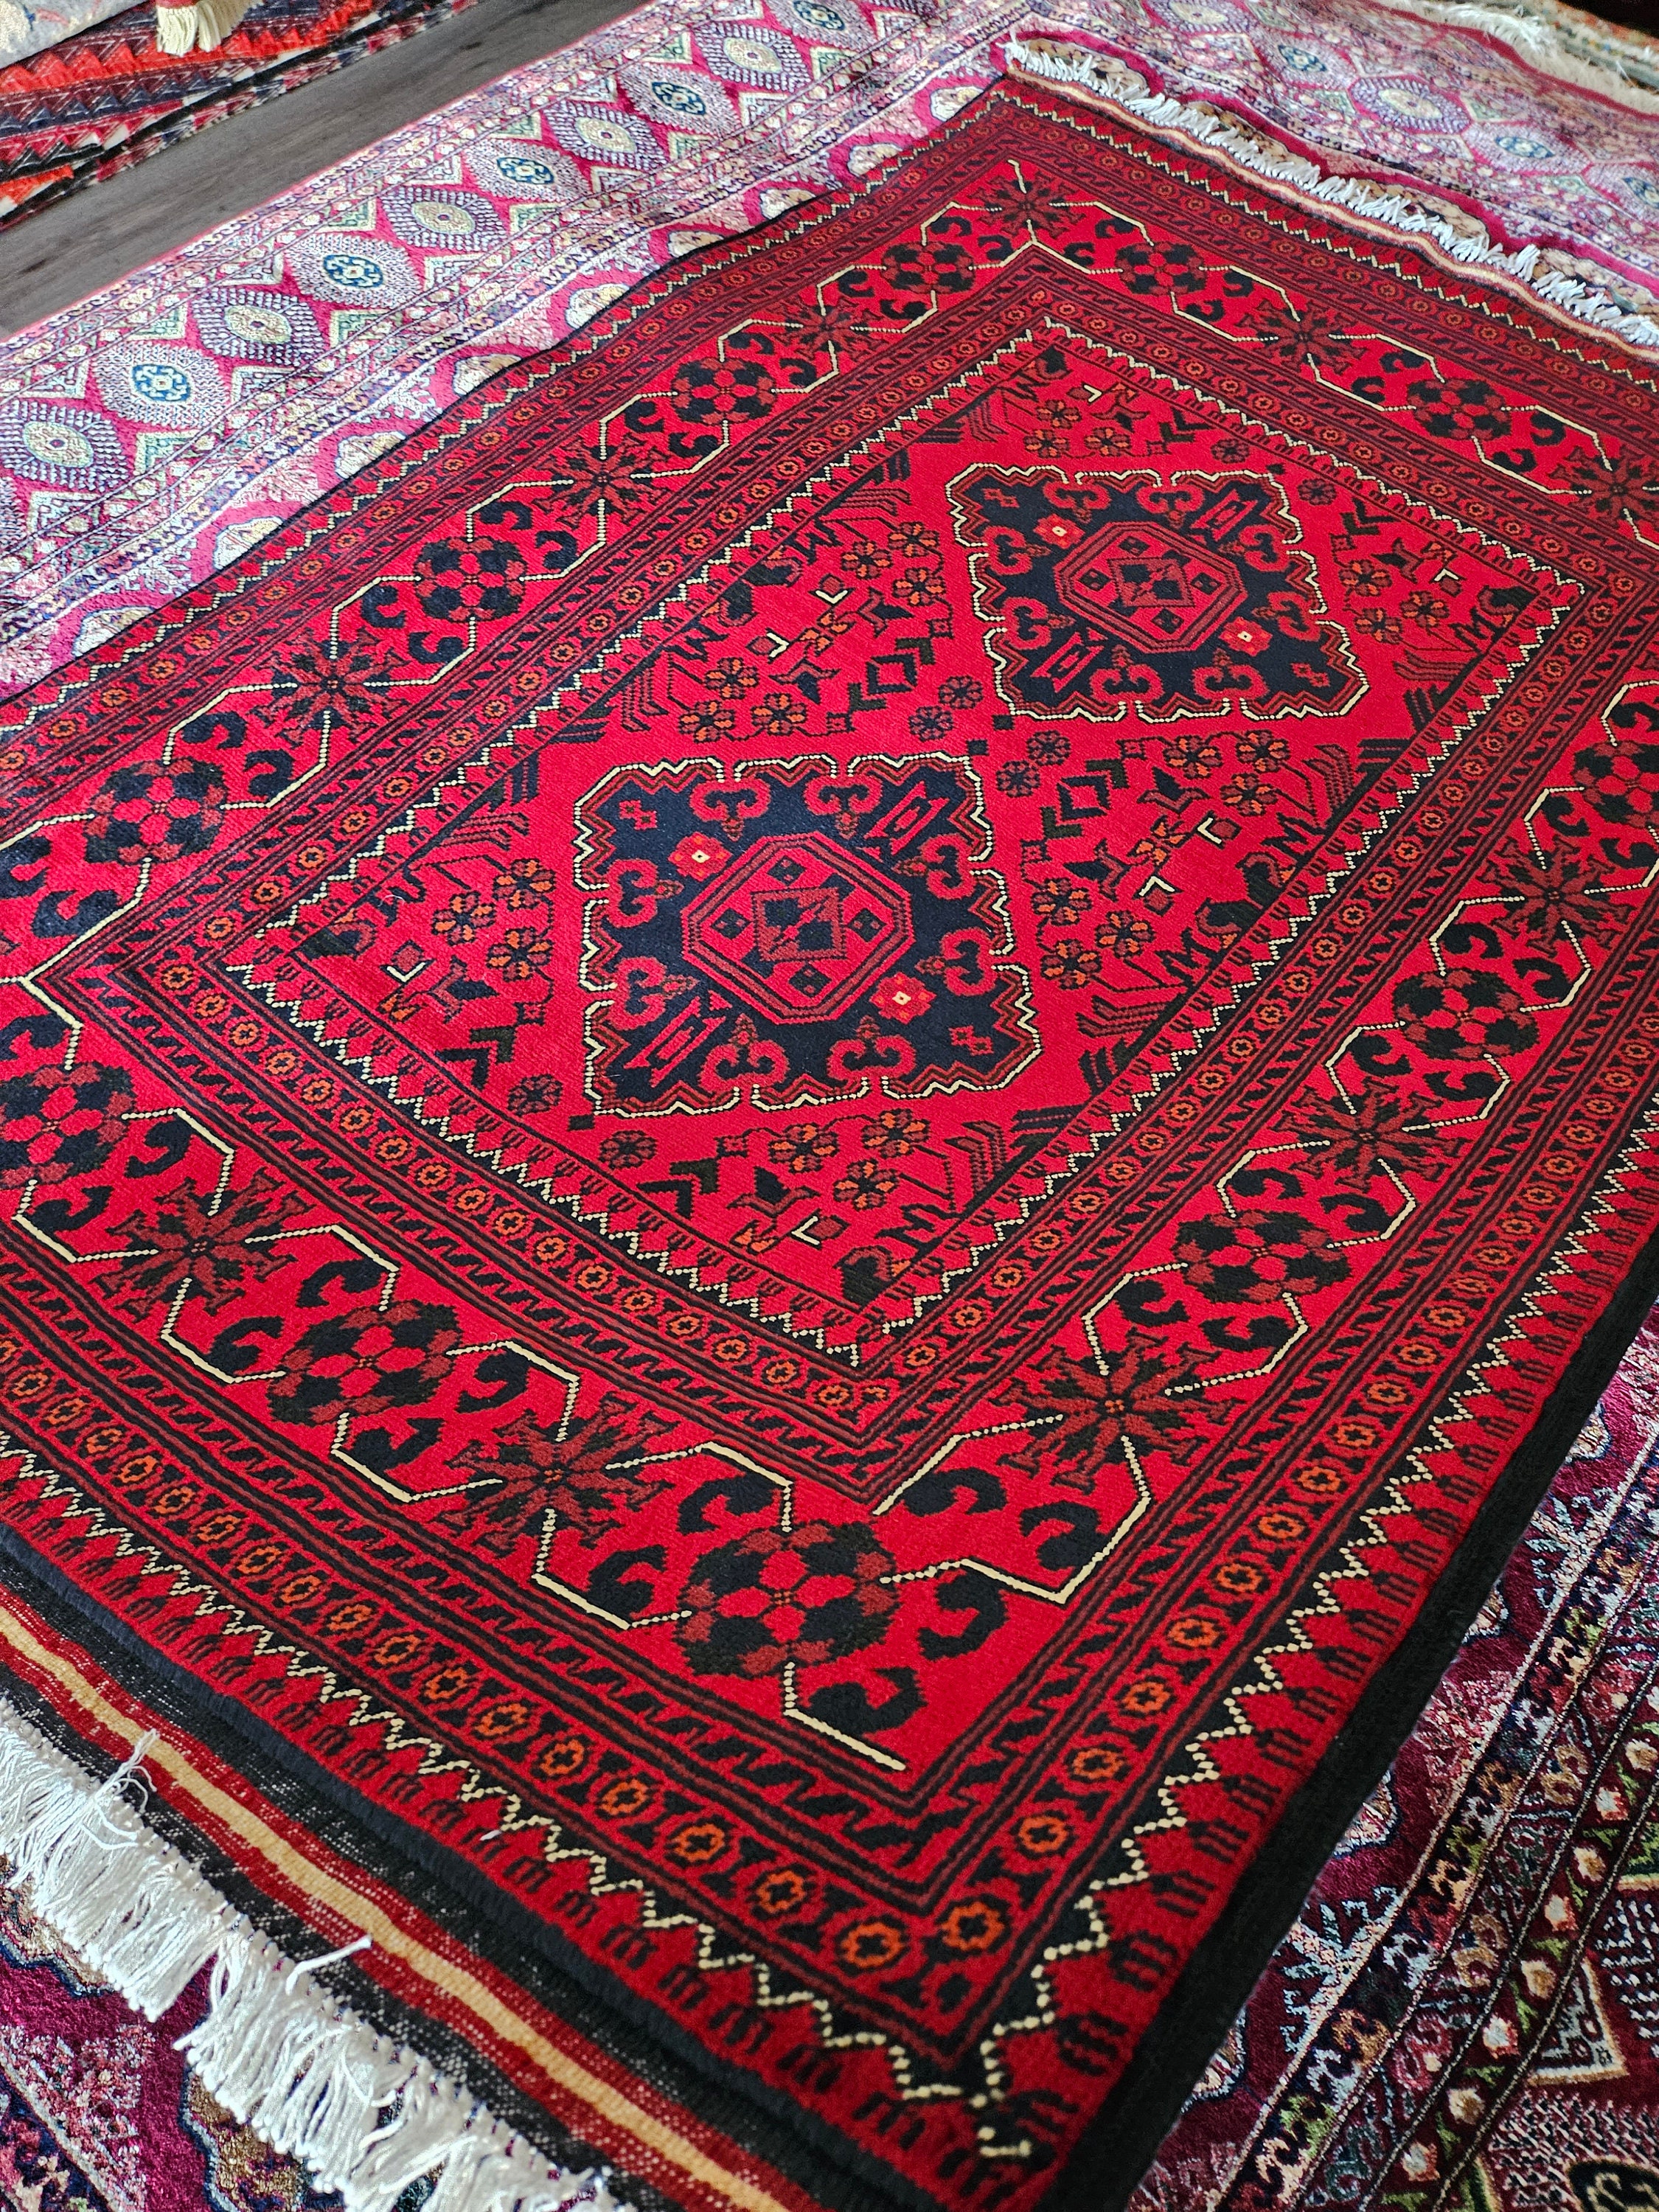 Small Afghan rug, 3x5 rug, turkish towel, faded rug, bathroom rug, housewarming gift, bed plans, hand made, colorful rug, hooked rugs large